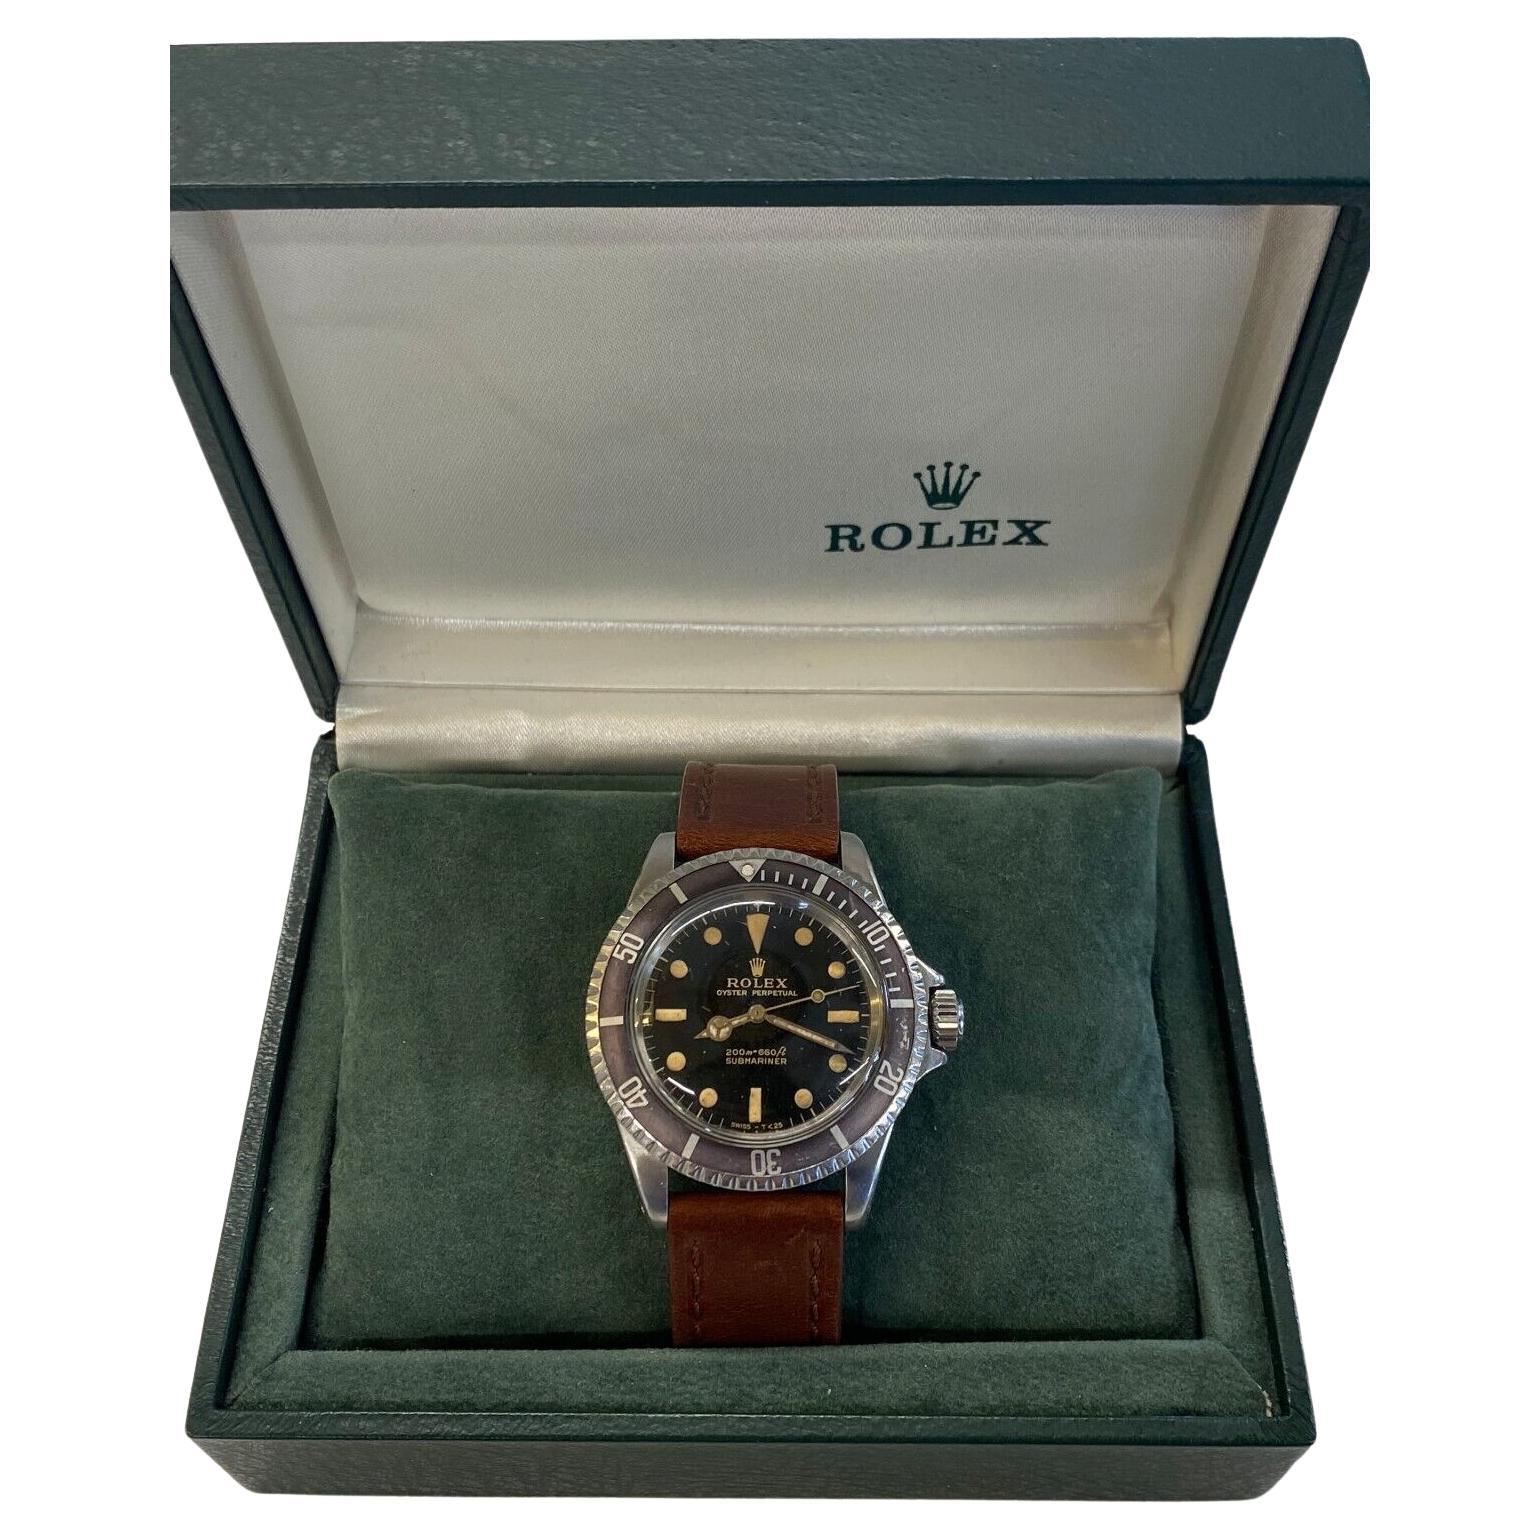 Rare Rolex James Bond Submariner circa 1966 Watch Ref. #5513 For Sale